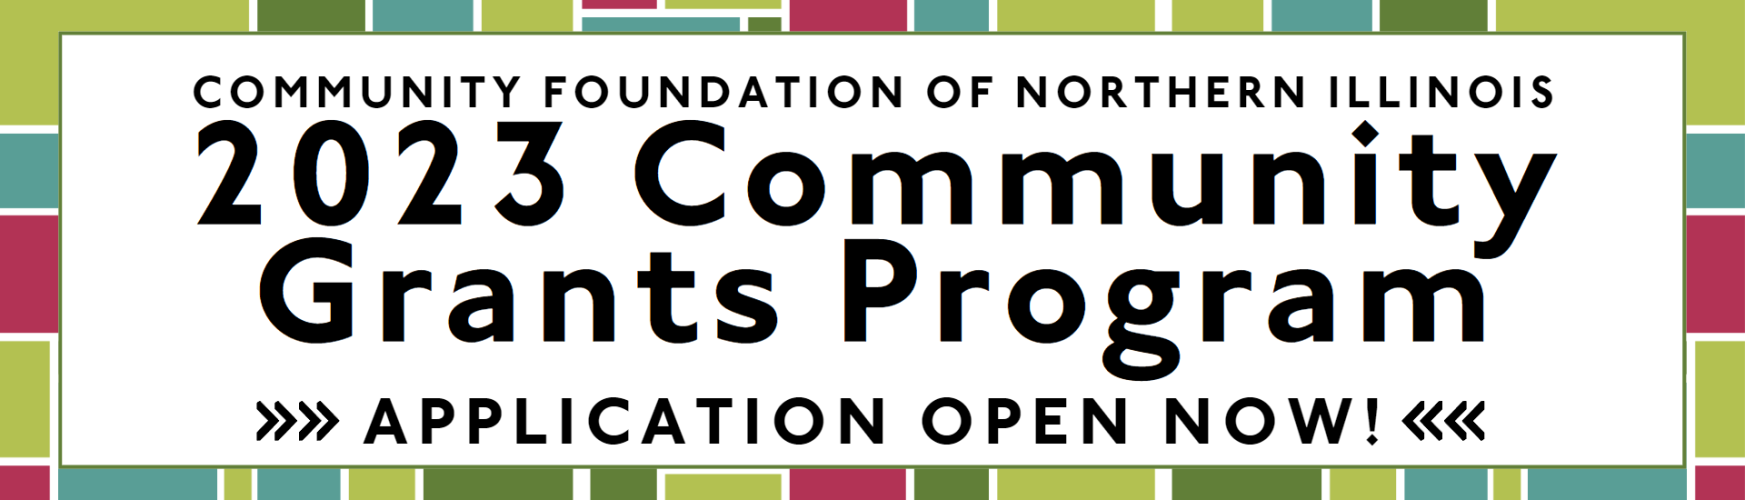 2023 Community Grants Program application open now